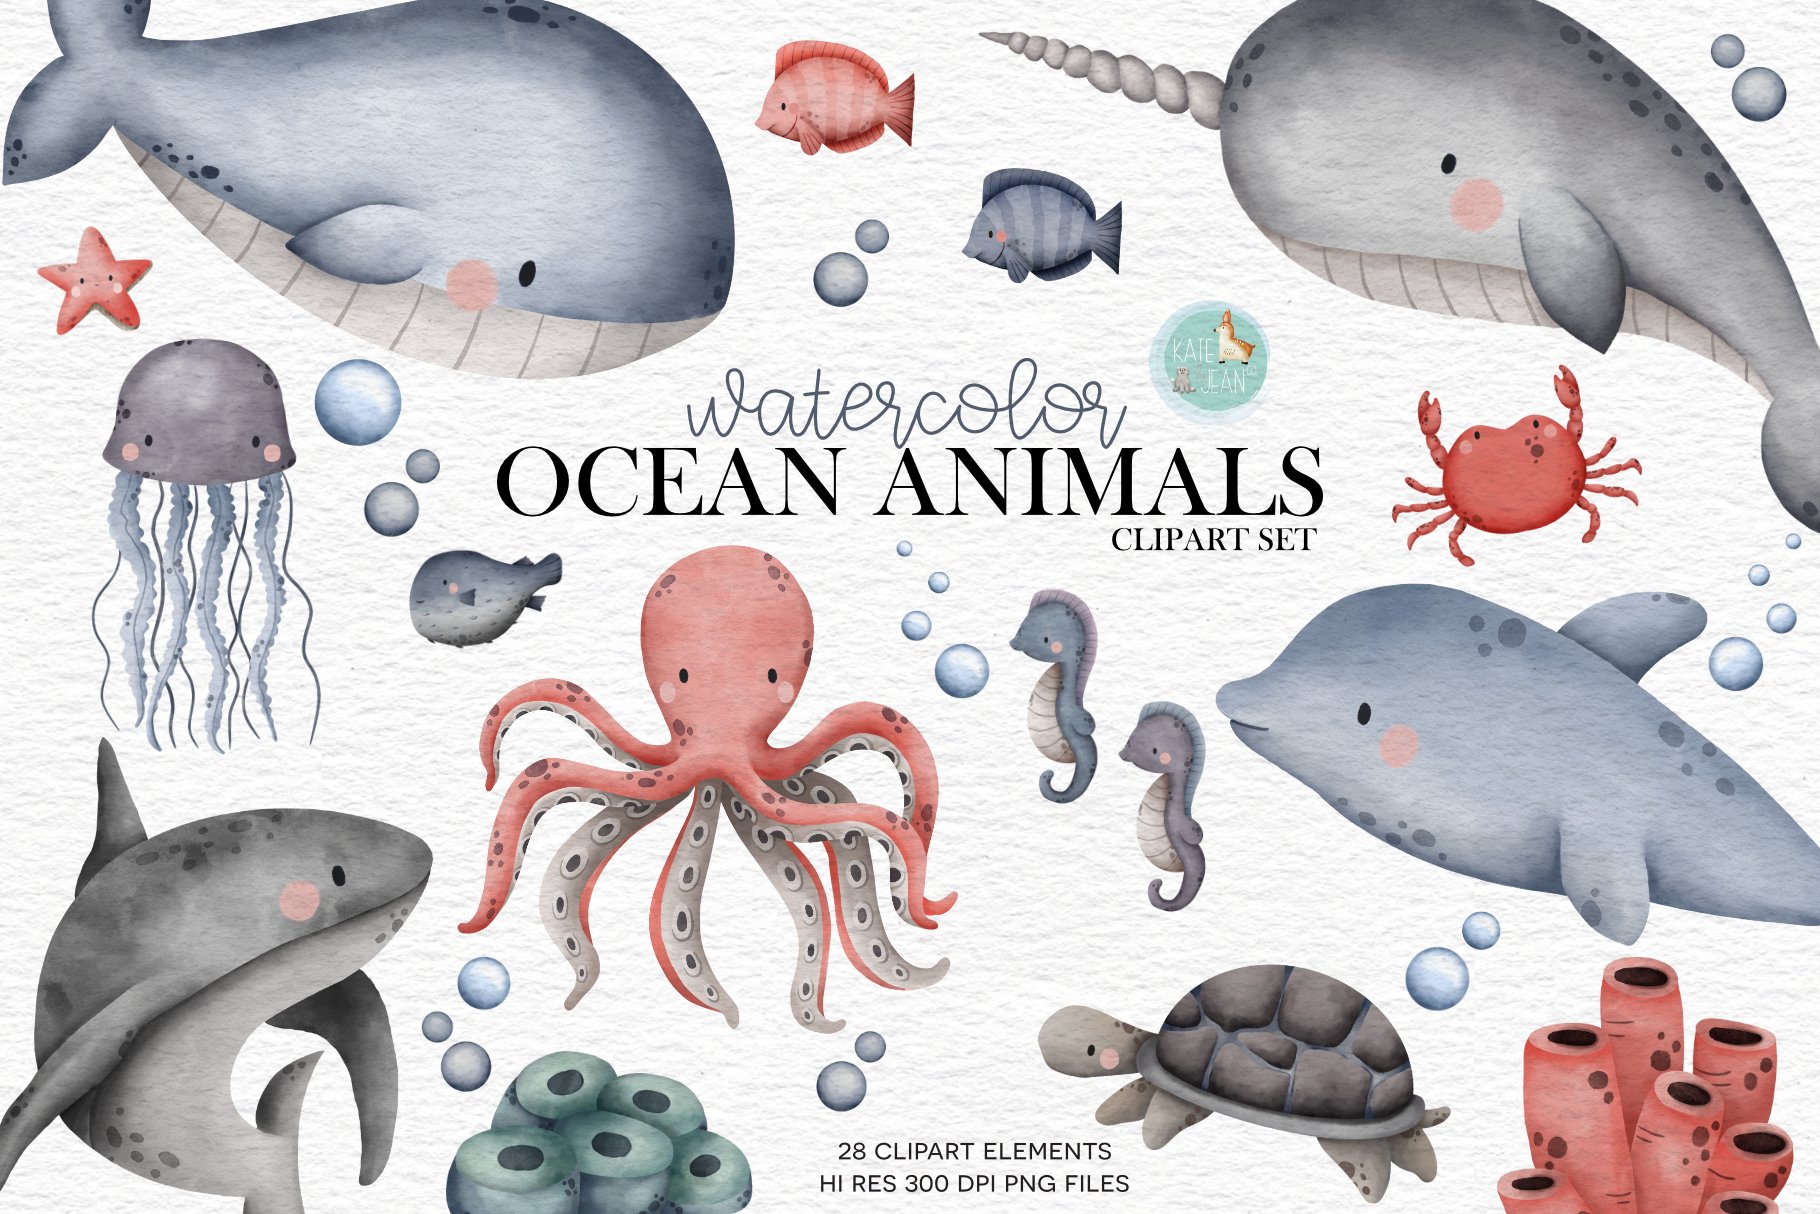 Ocean Animals cover image.